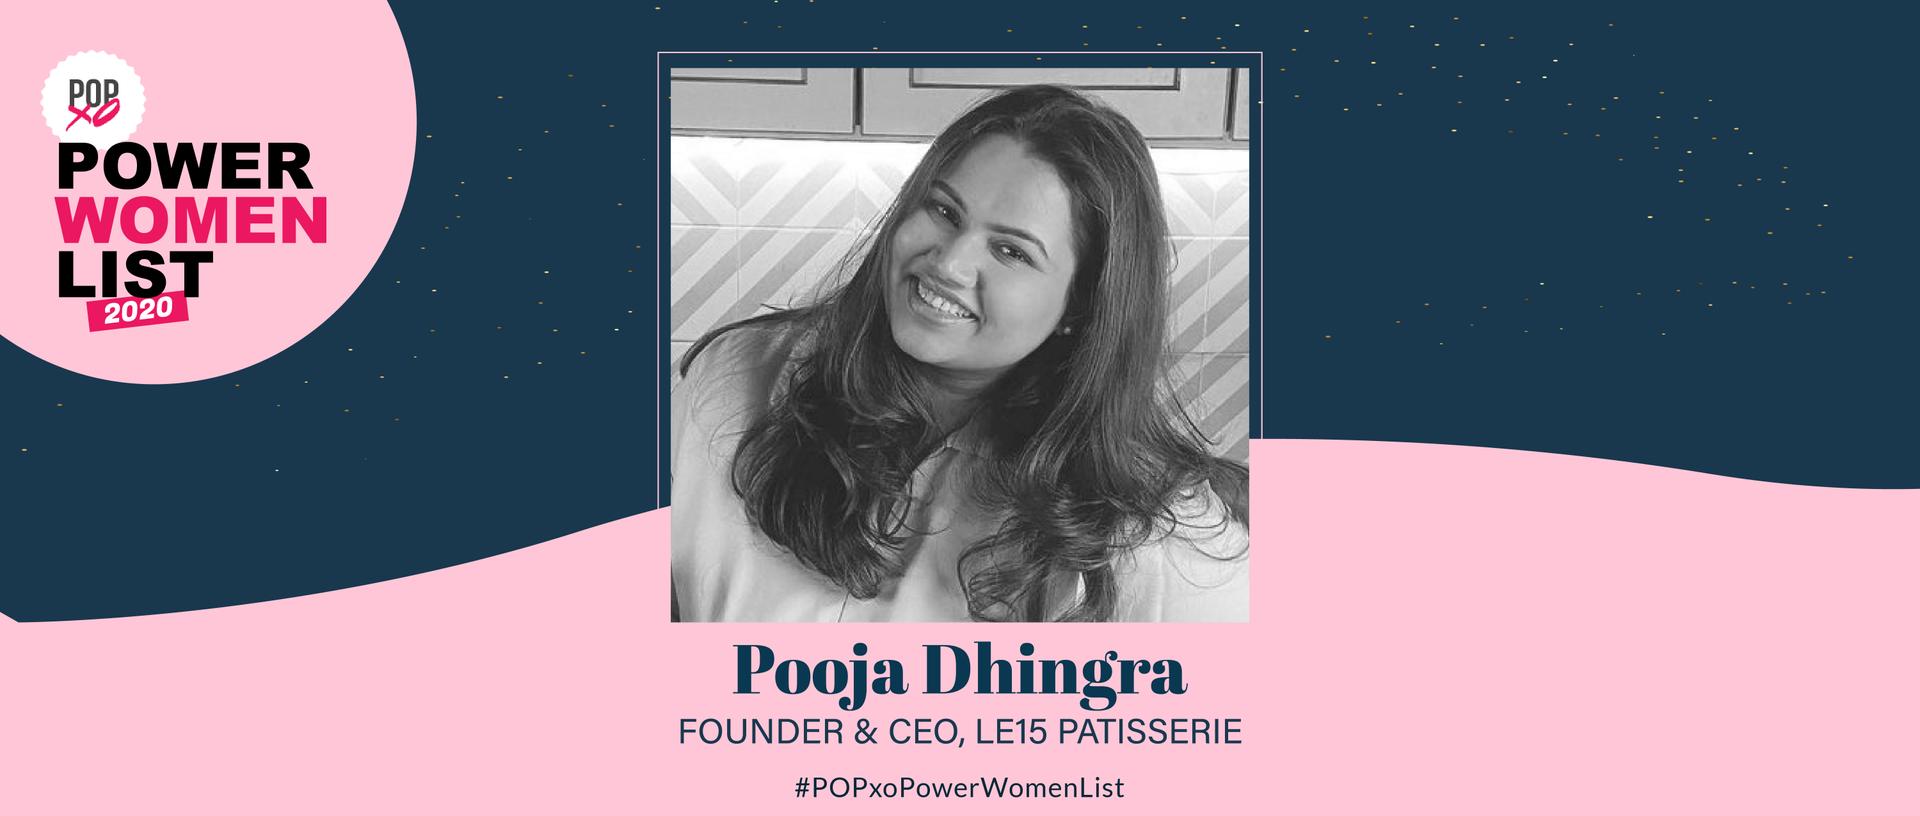 POPxo Power Women List 2020: Pooja Dhingra, The Chef That Got Us Cooking Gourmet Food